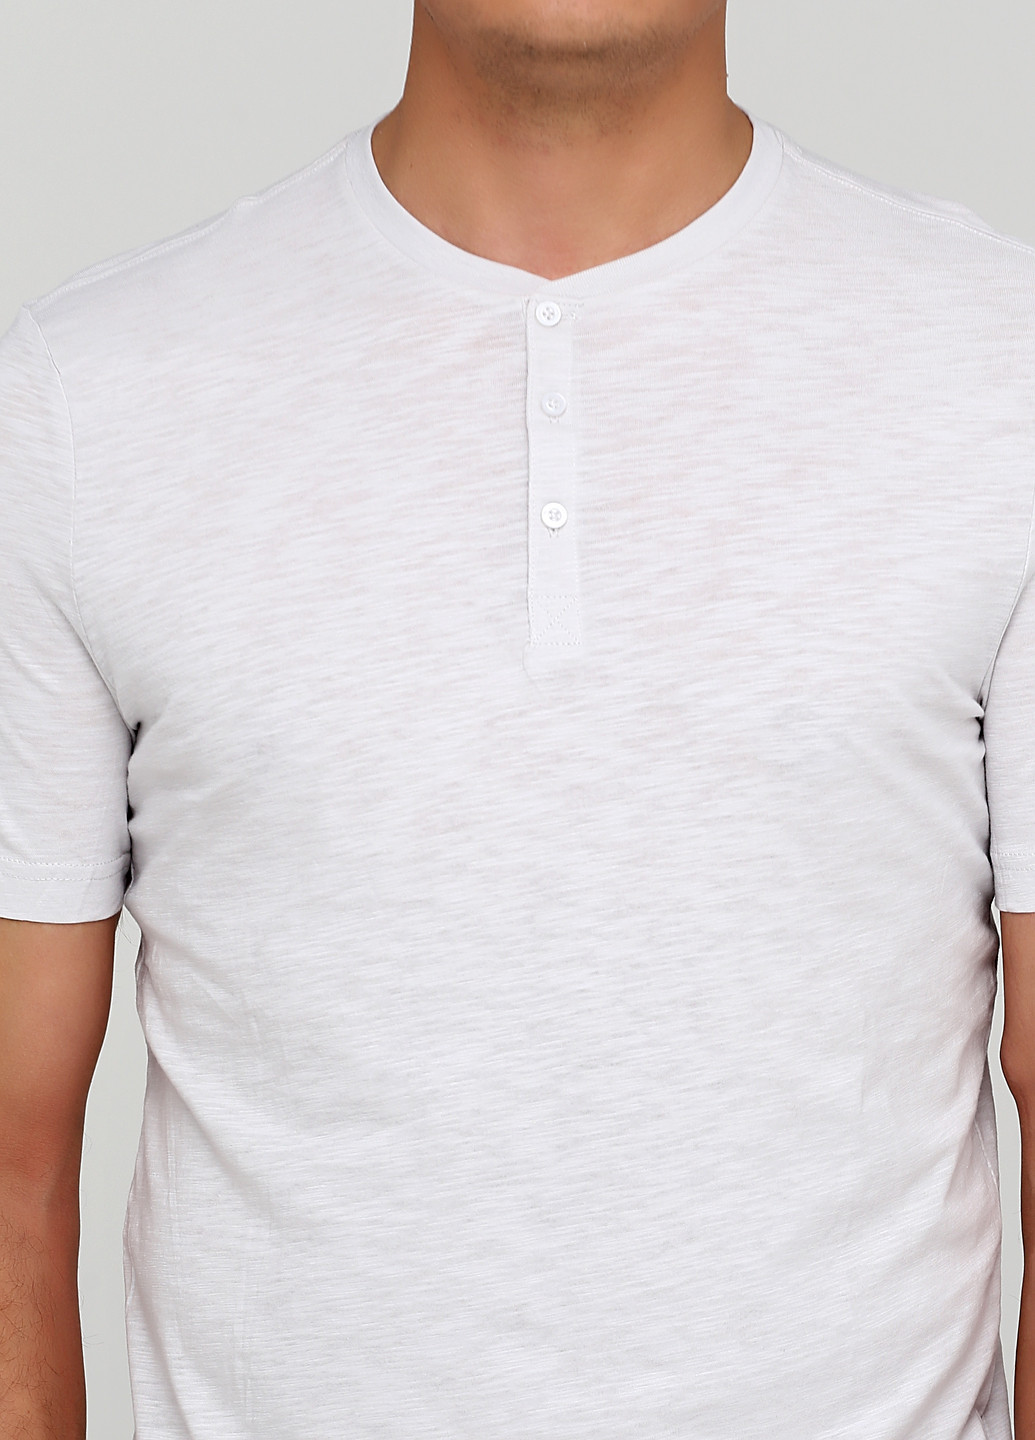 Светло-серая футболка-поло для мужчин H&M меланжевая